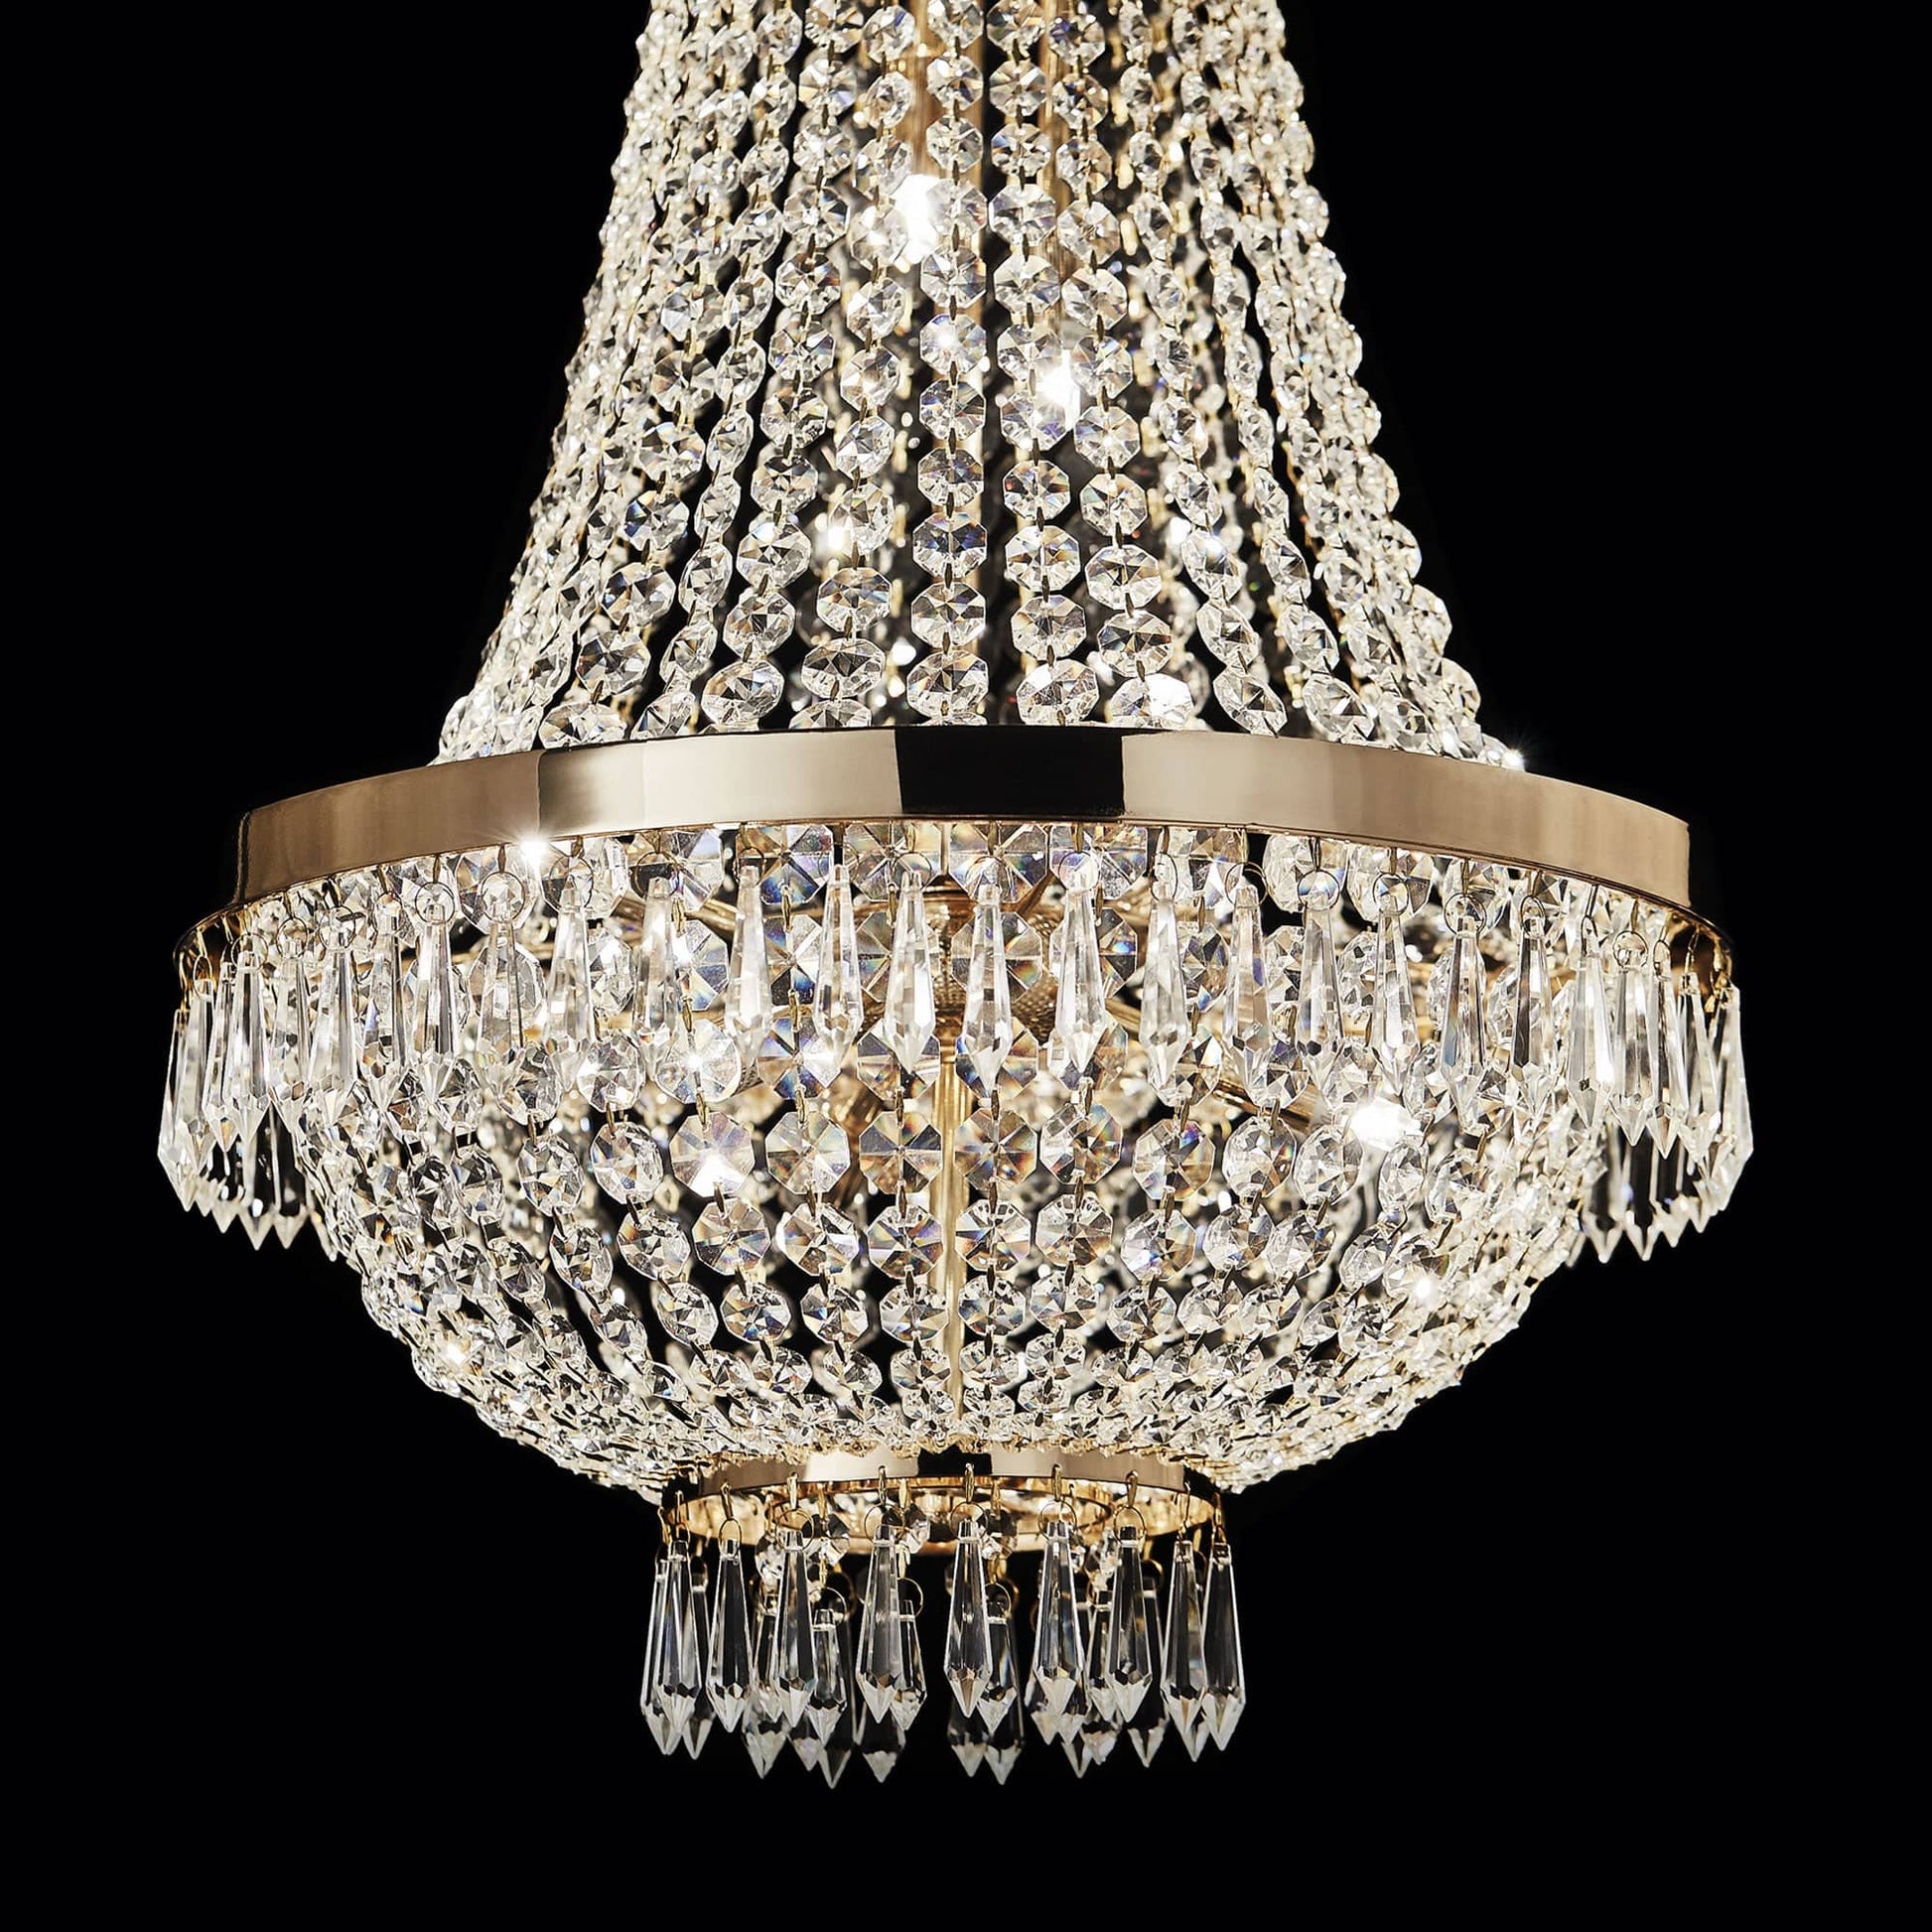 Ideal Lux Lighting Pendant lights Gold Caesar Crystal Chandelier